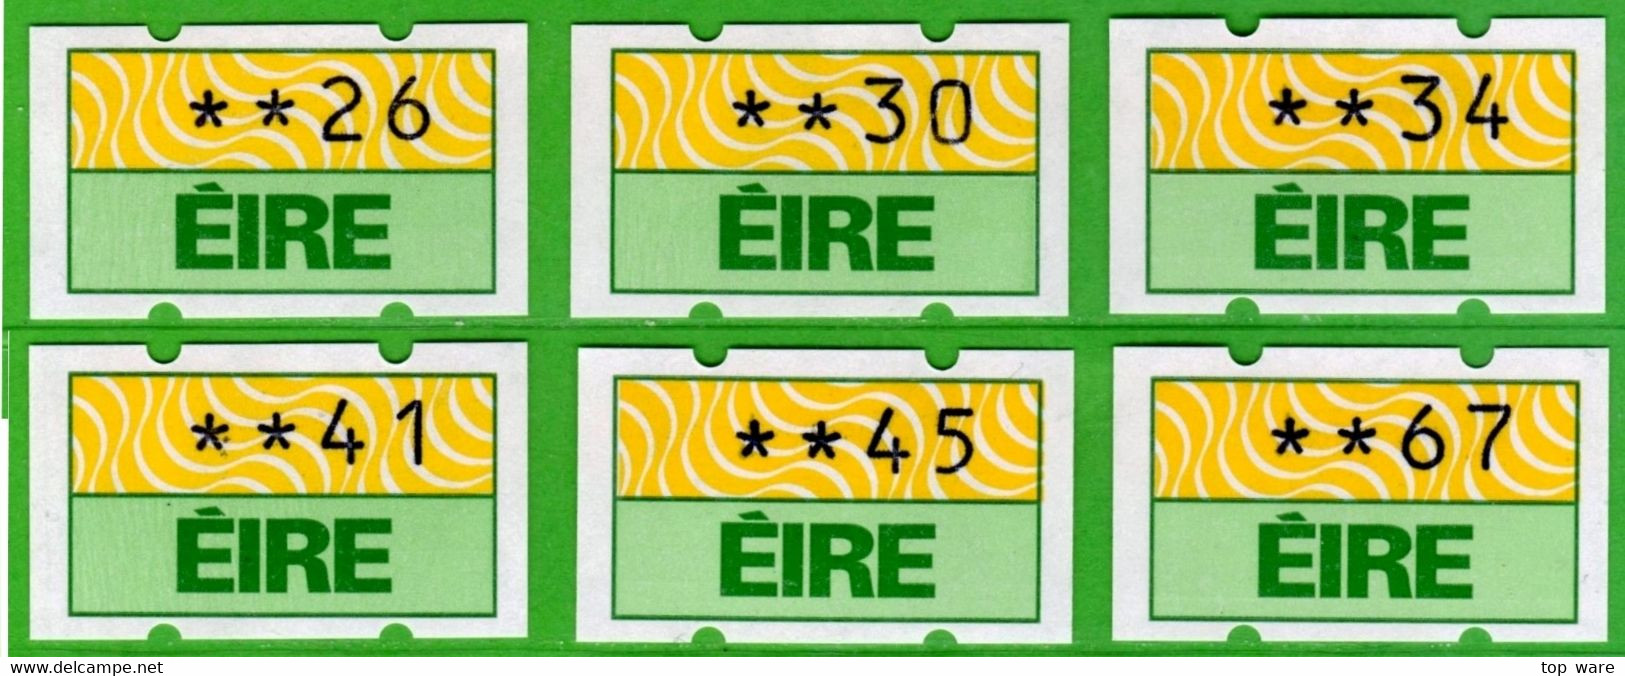 EIRE Ireland 1990 The Very First Soar Stamps Standard Set MNH / ATM Automatenmarken Distributeur Vending Machine Kiosk - Franking Labels